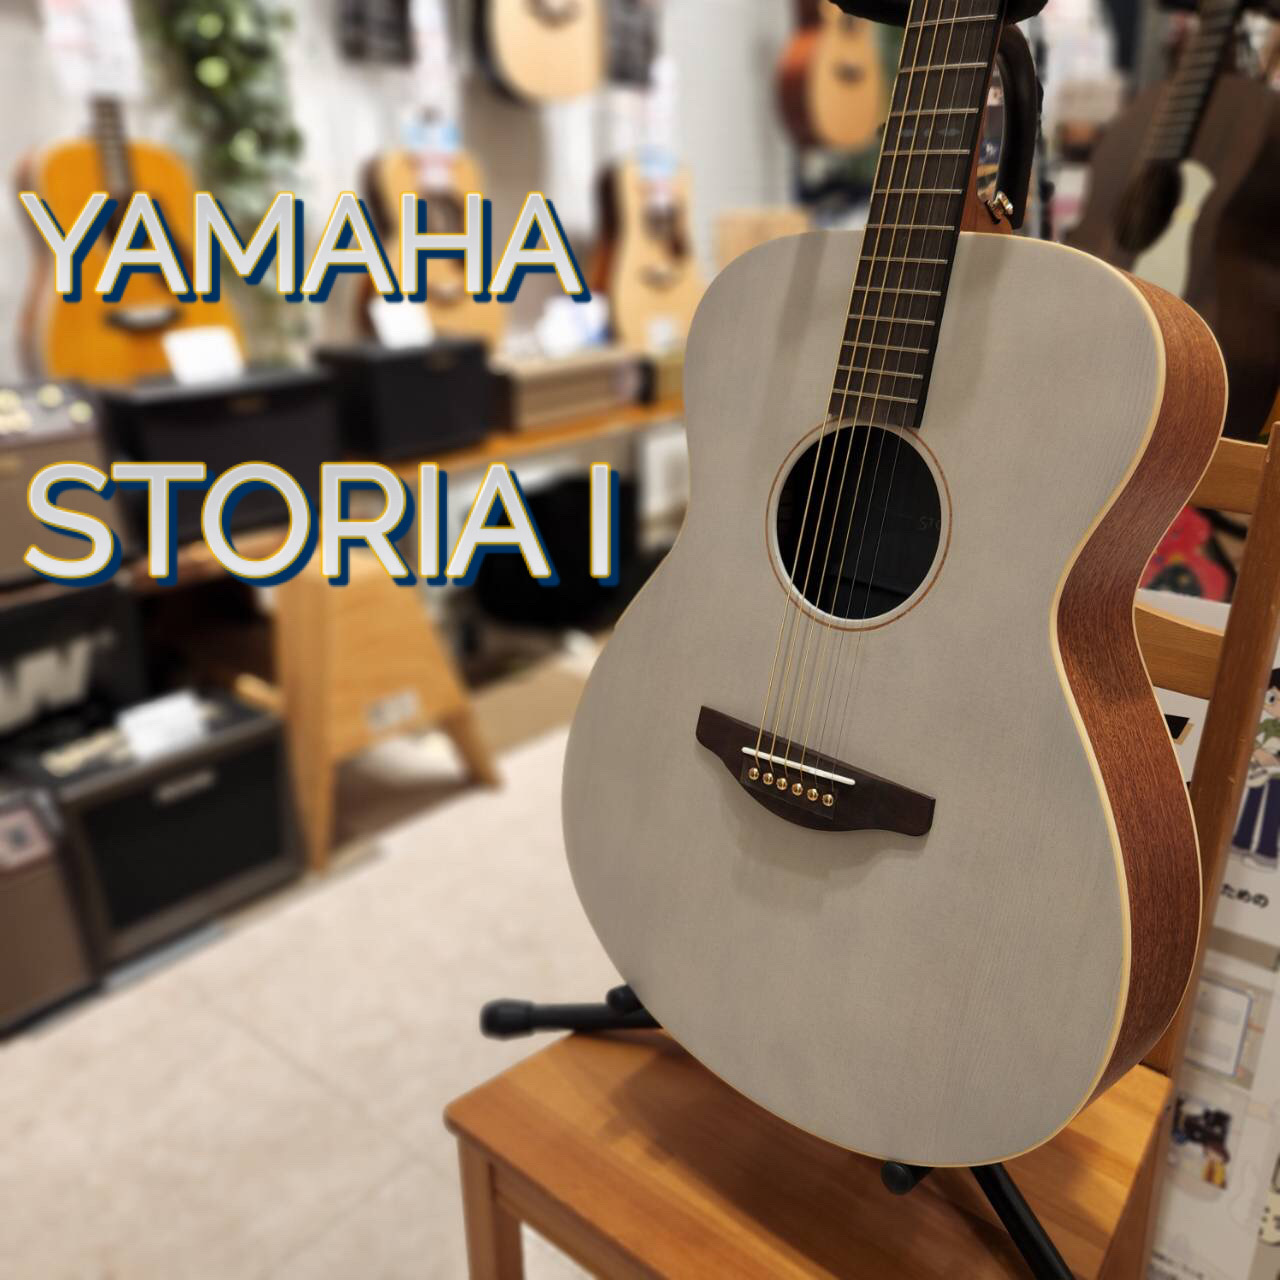 YAMAHA STORIA I アコースティックギター エレアコ ストーリア1 ヤマハ